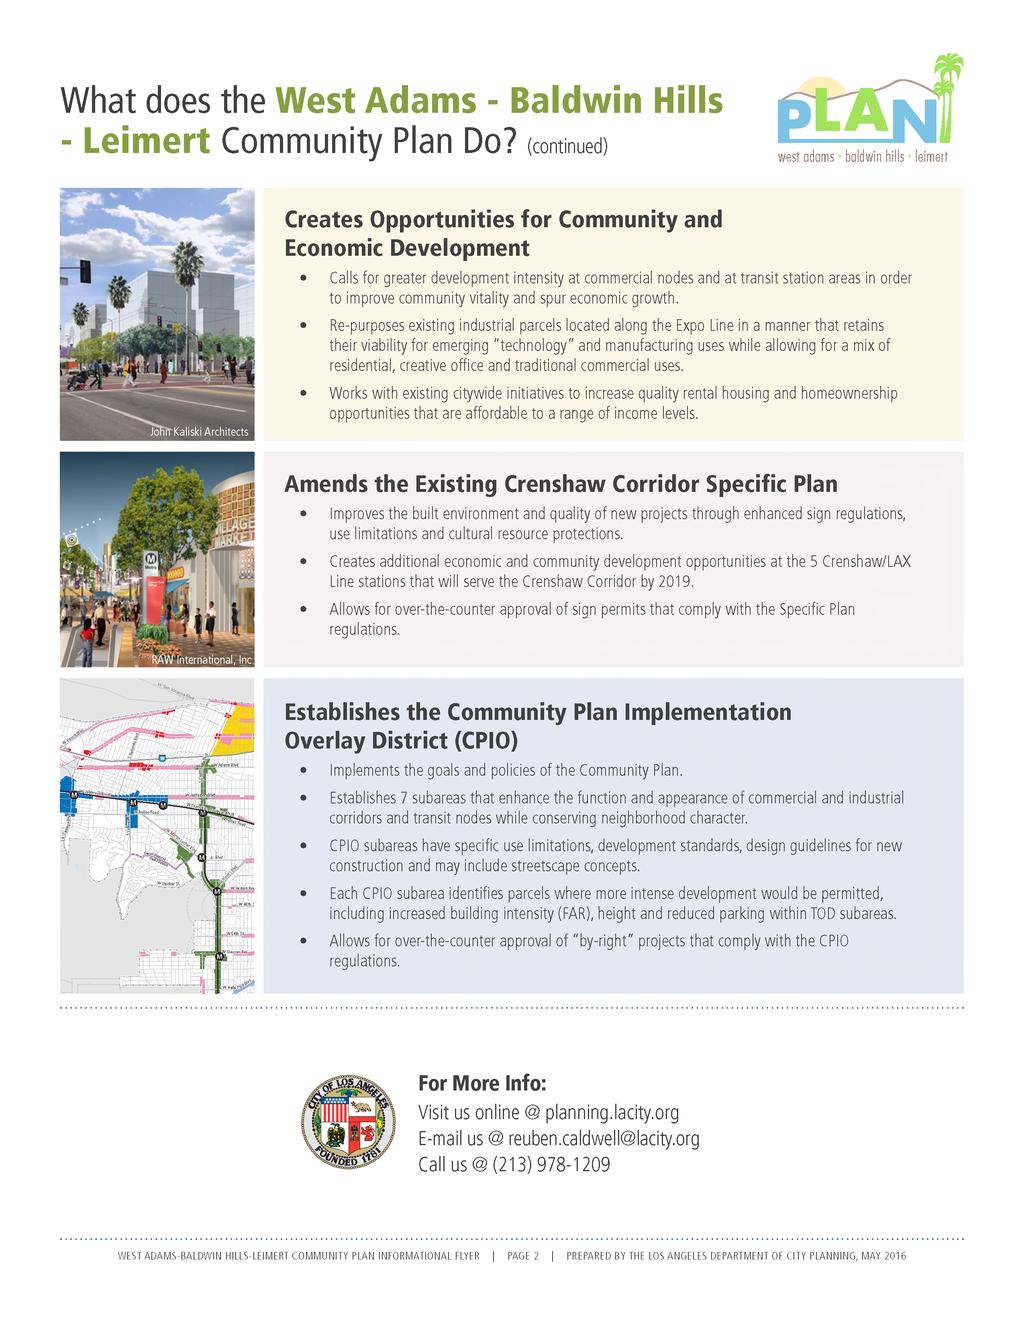 What does the West Adams - Baldwin Hills - Leimert Community Plan Do? (continued) plan!